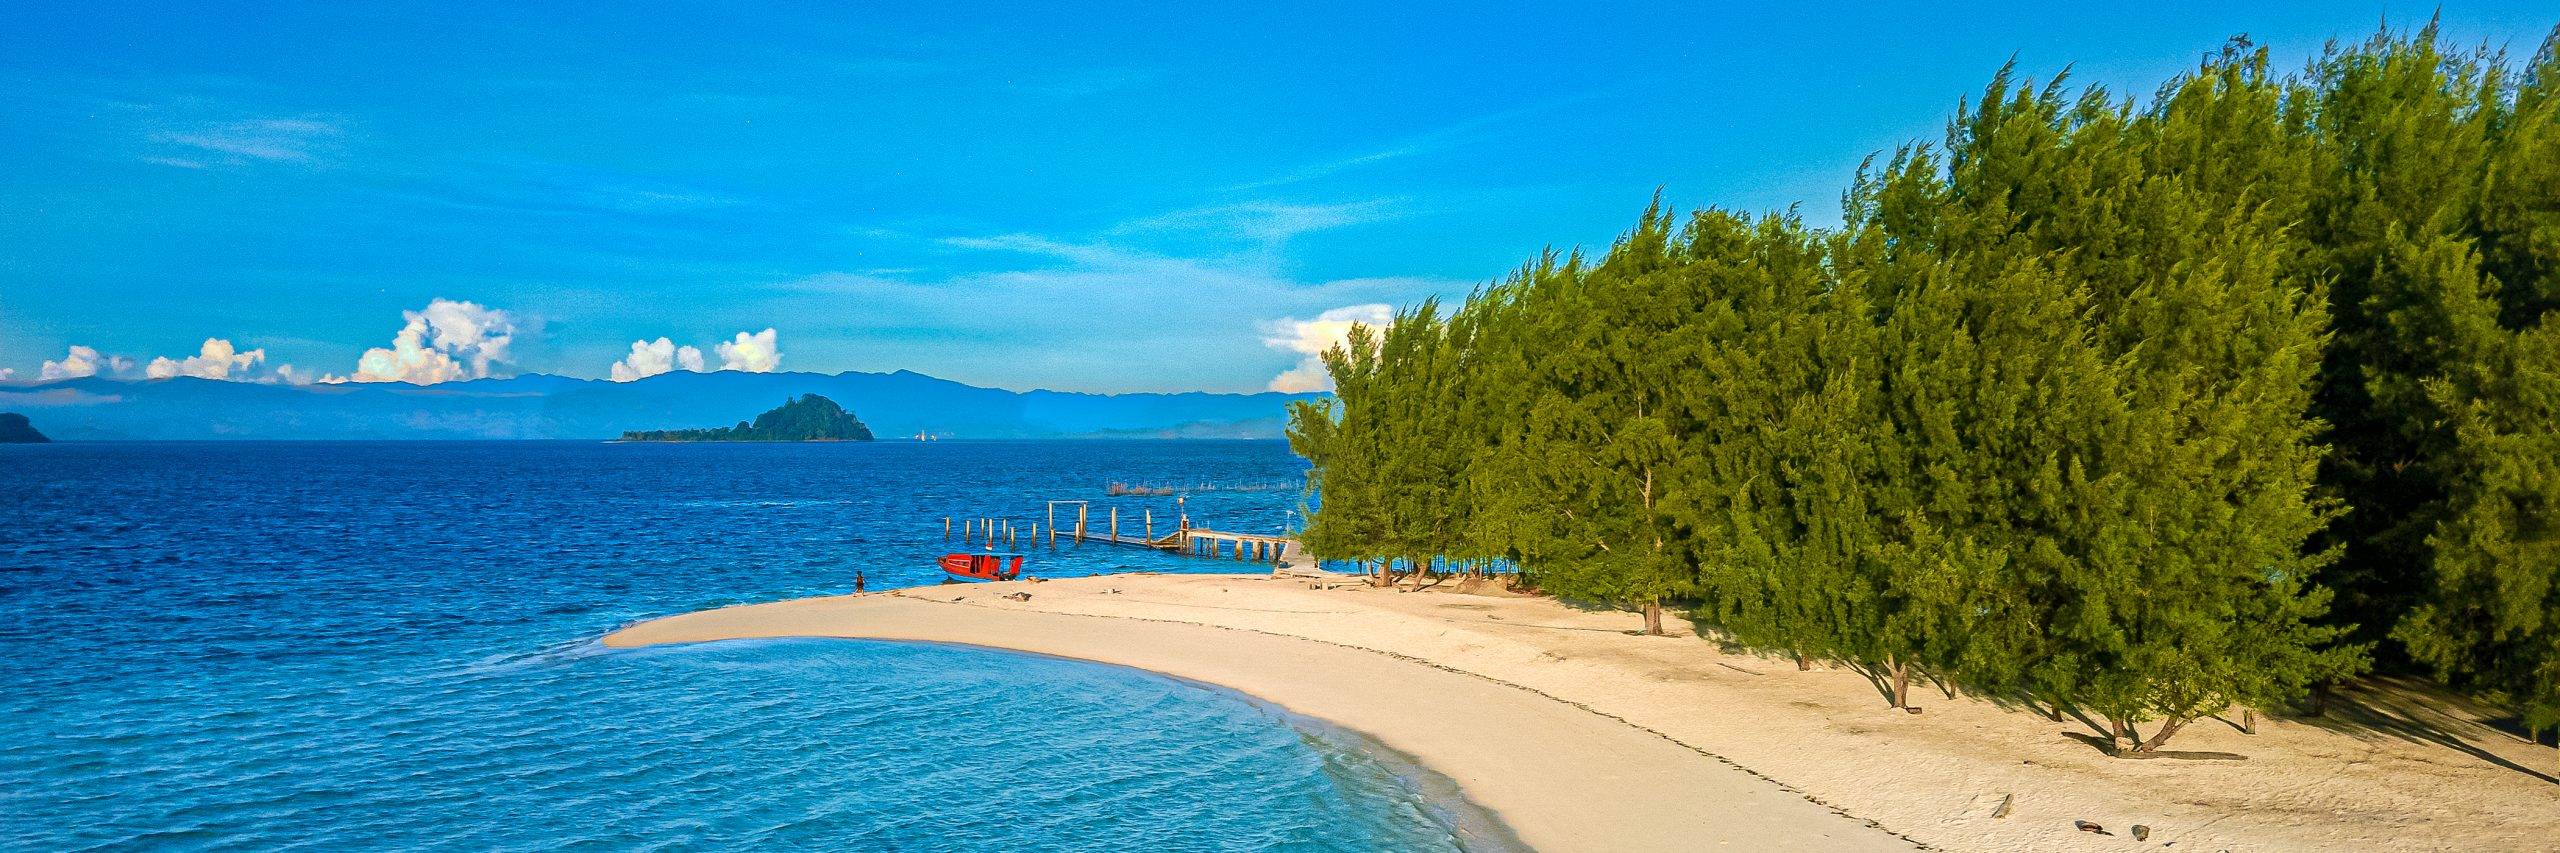 Sulawesi • Saronde Island Resort • Blue Bay Divers